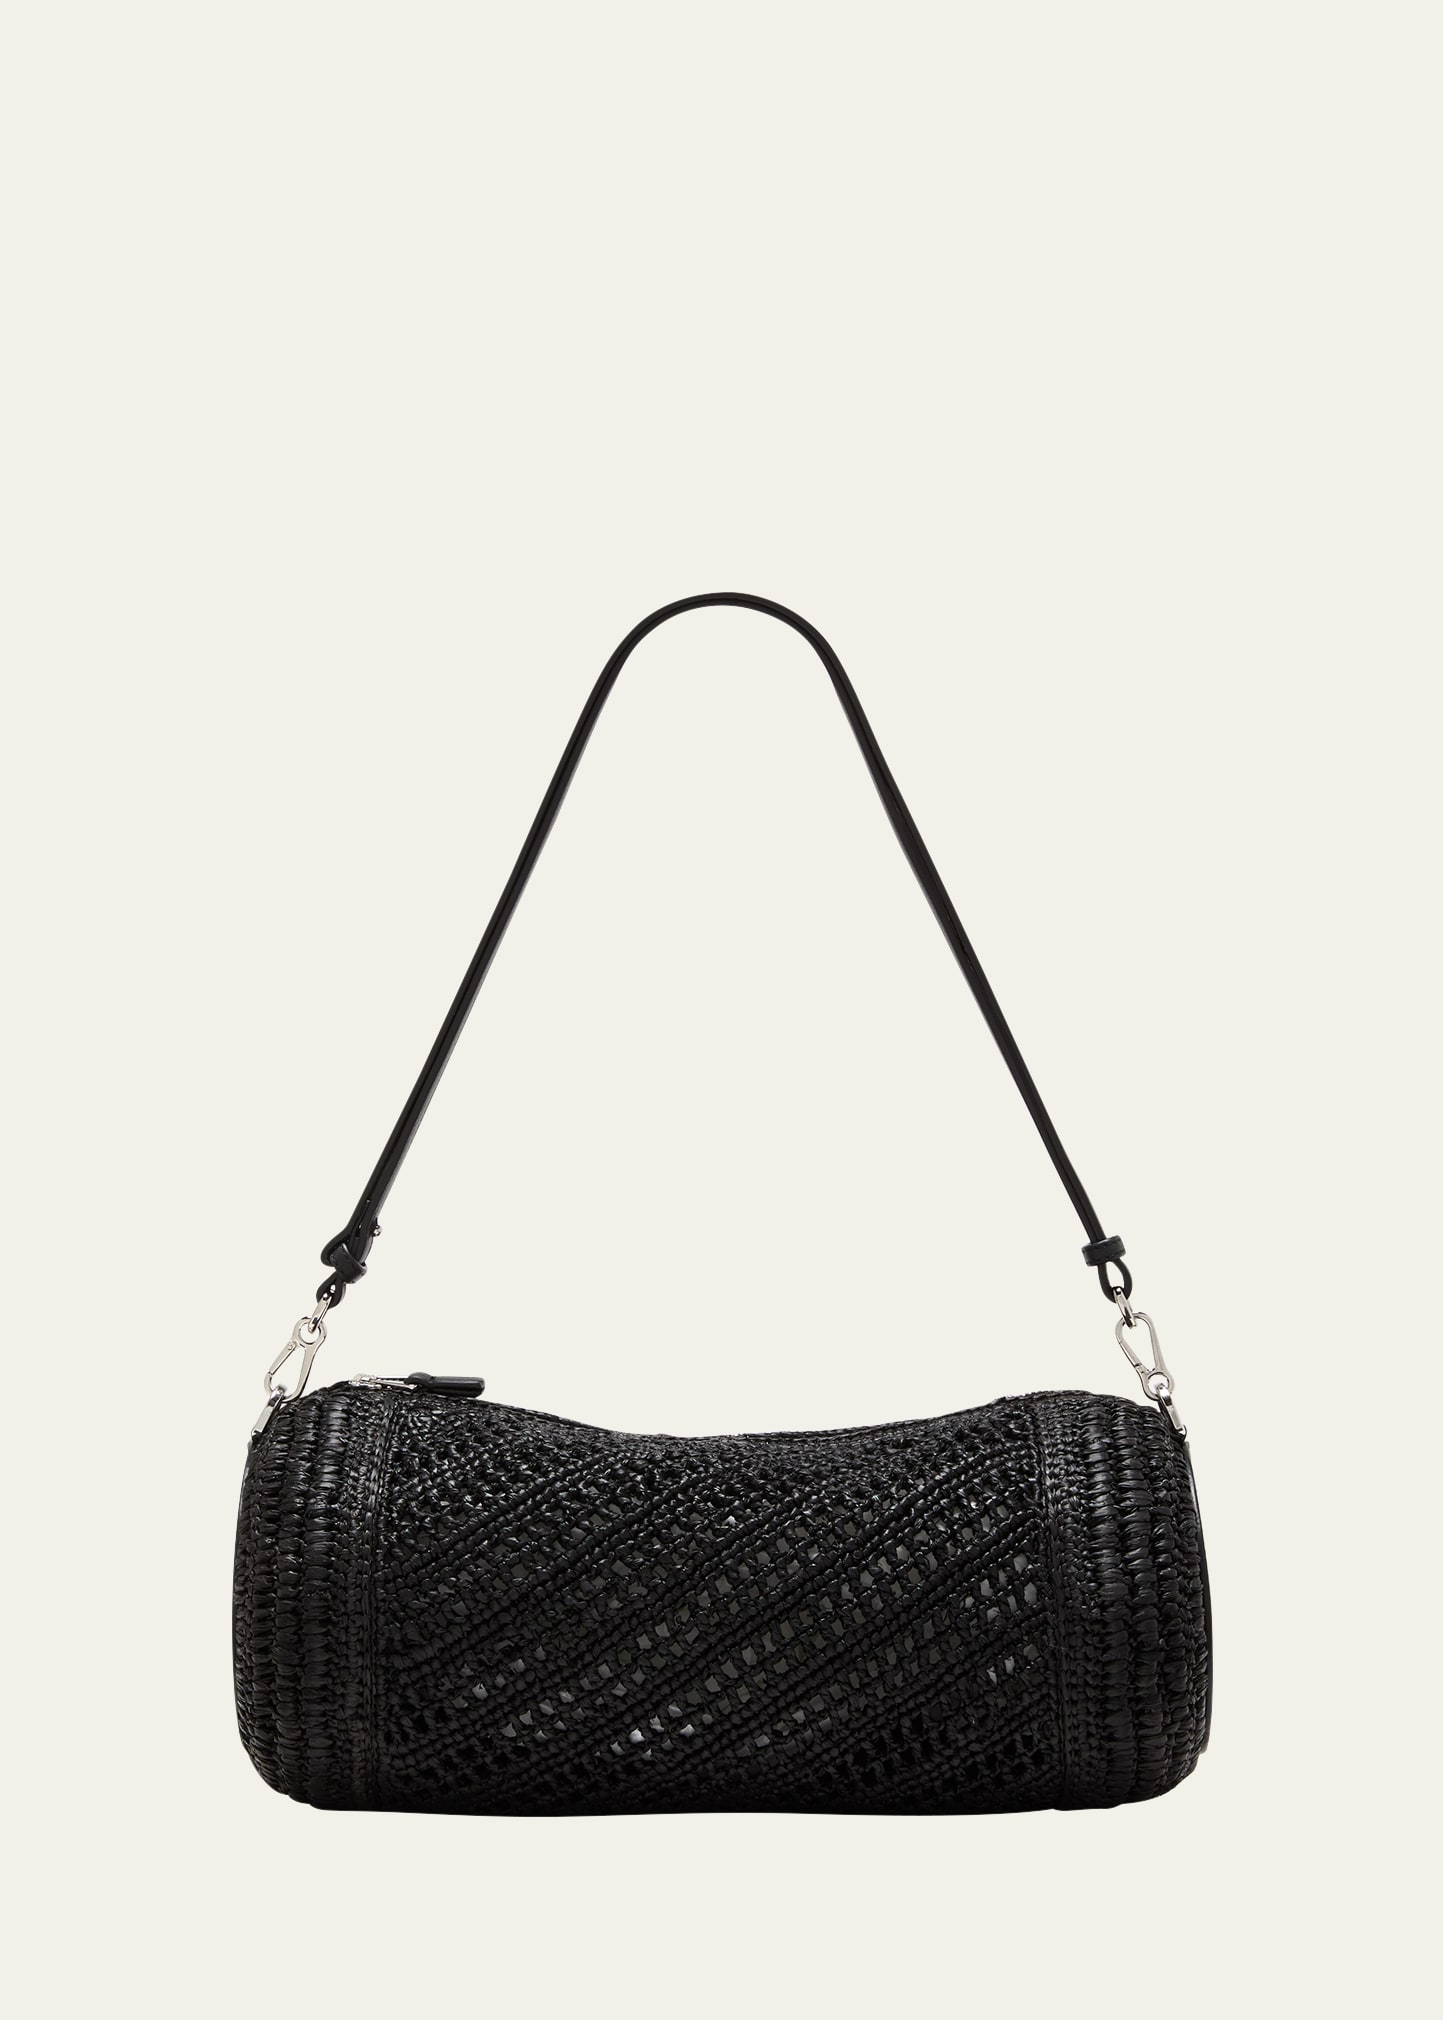 Thoughts on the loewe bracelet bag? : r/handbags